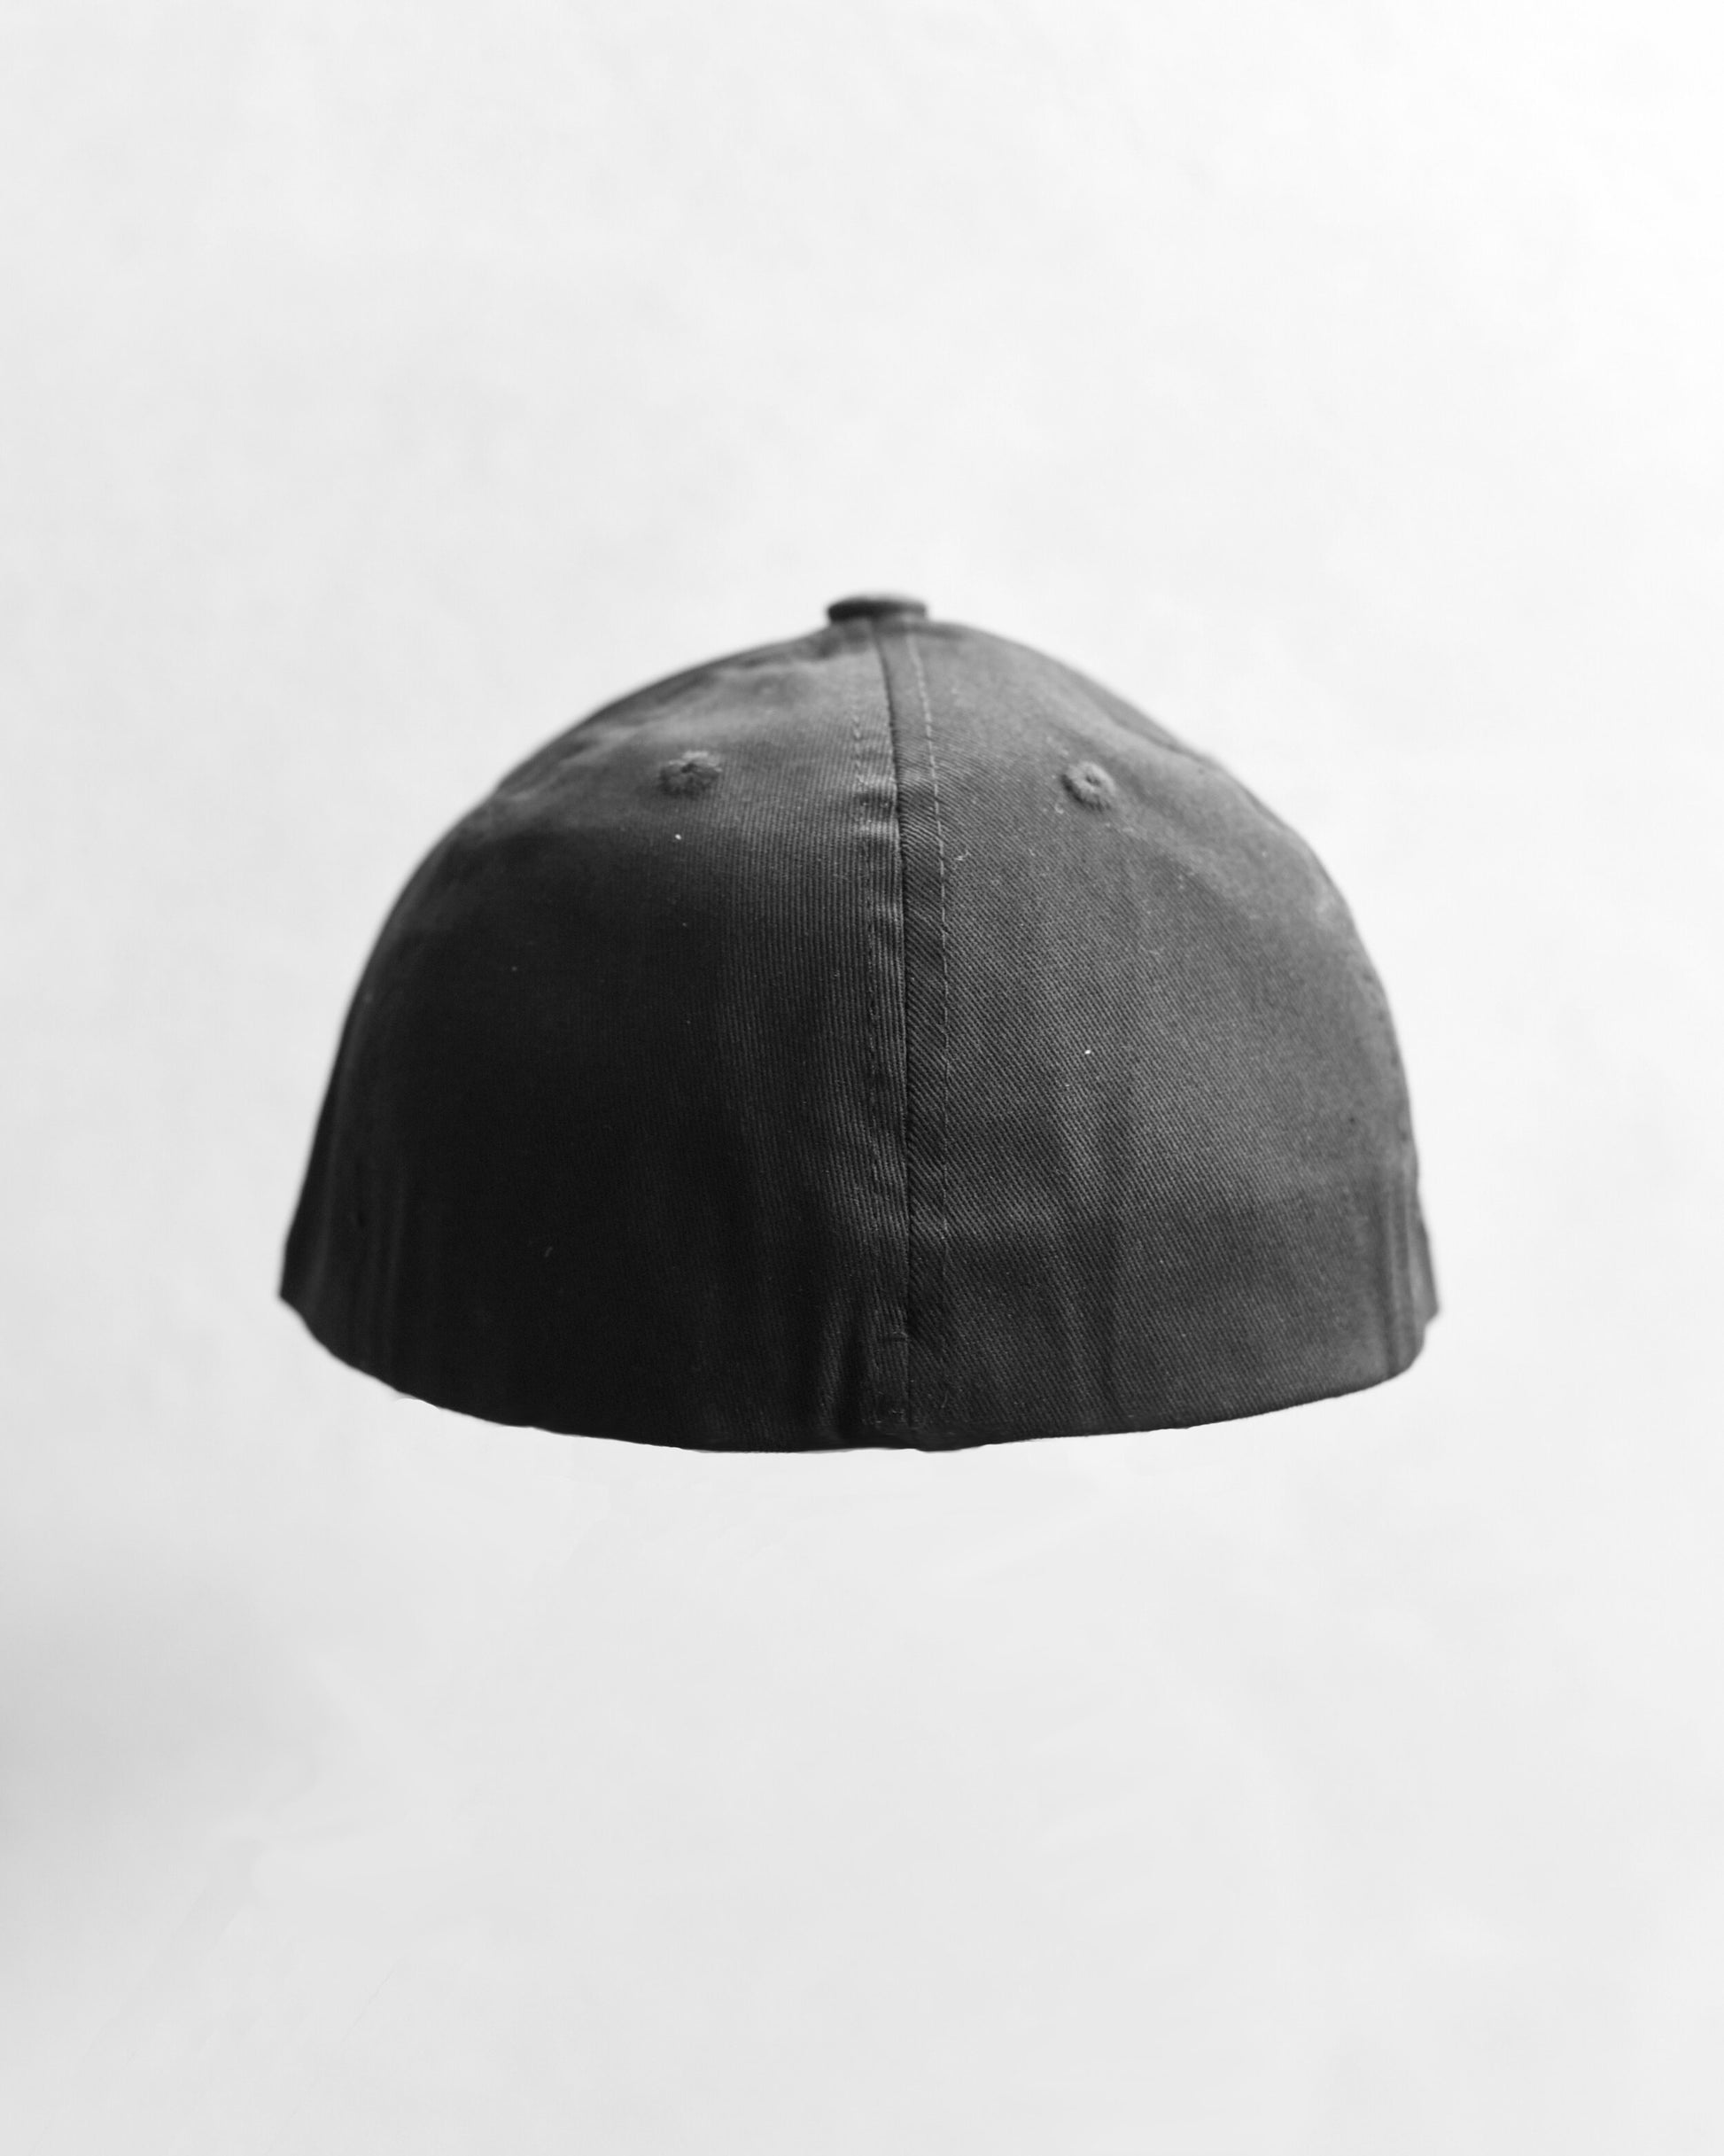 The black base cap blackswing.golf - blackswing.golf Headwear